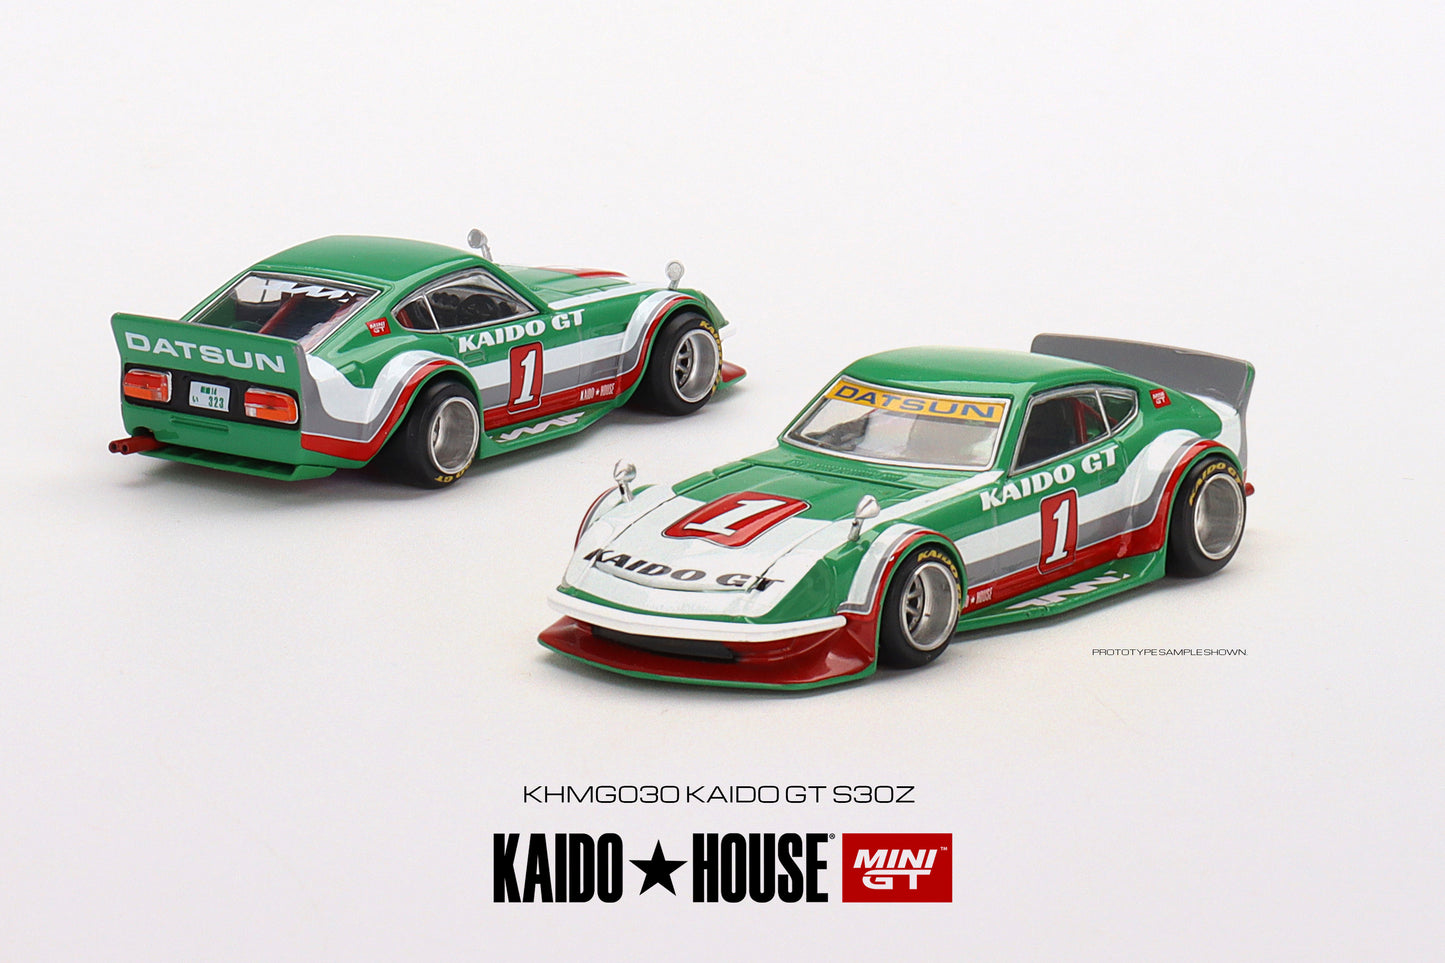 MINI GT X KAIDO HOUSE Datsun KAIDO Fairlady Z Kaido GT V2  - RHD [ KHMG030]